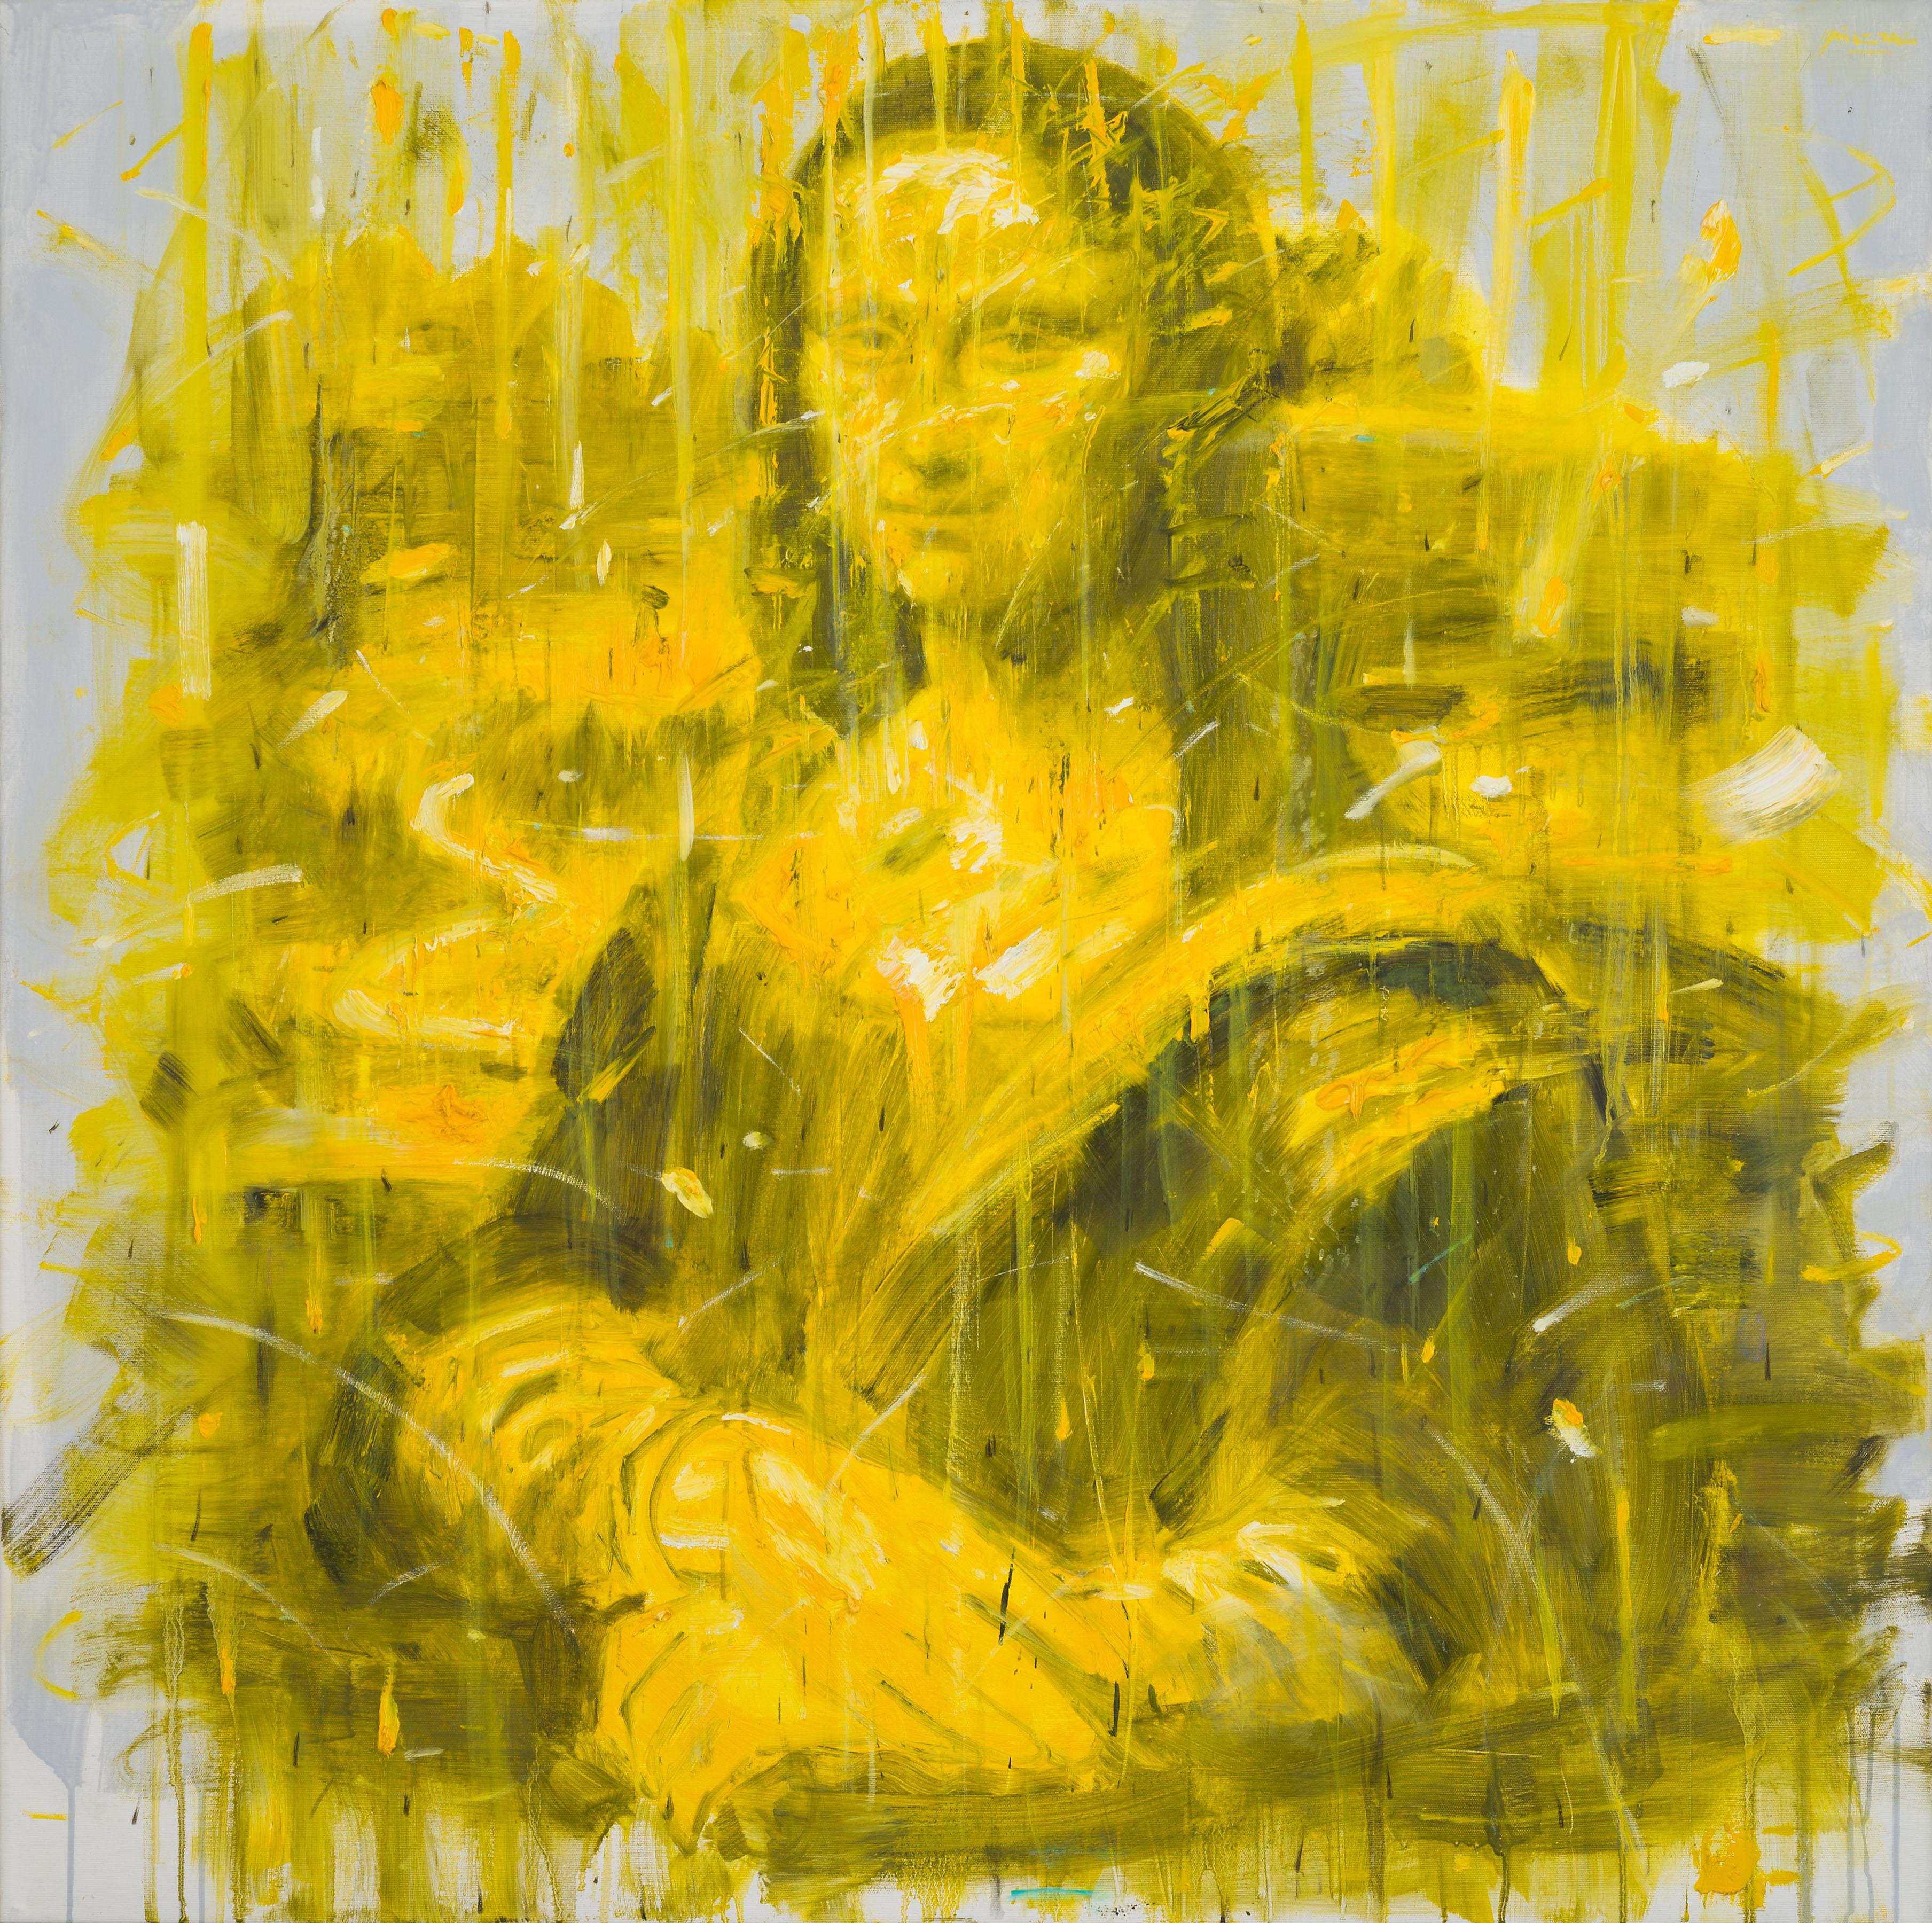 Milan Markovich Portrait Painting - La gioconda - contemporary art work of Mona Lisa oil on canvas portrait 